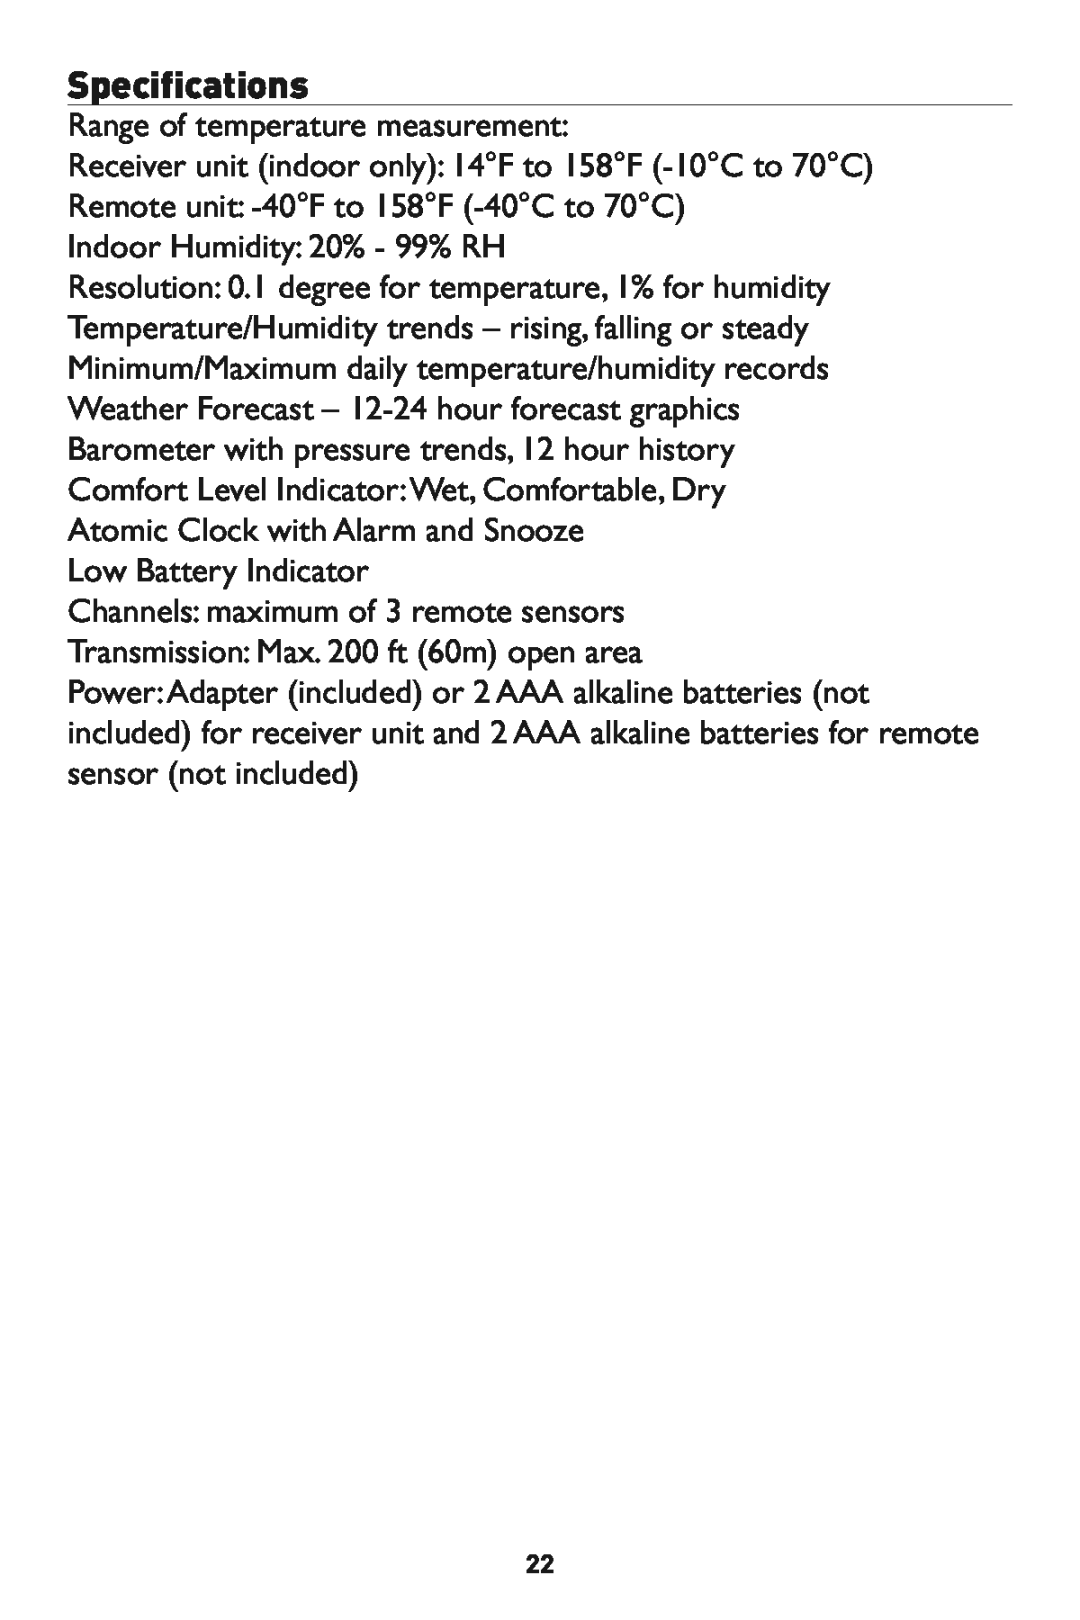 Taylor 1527 instruction manual Range of temperature measurement 